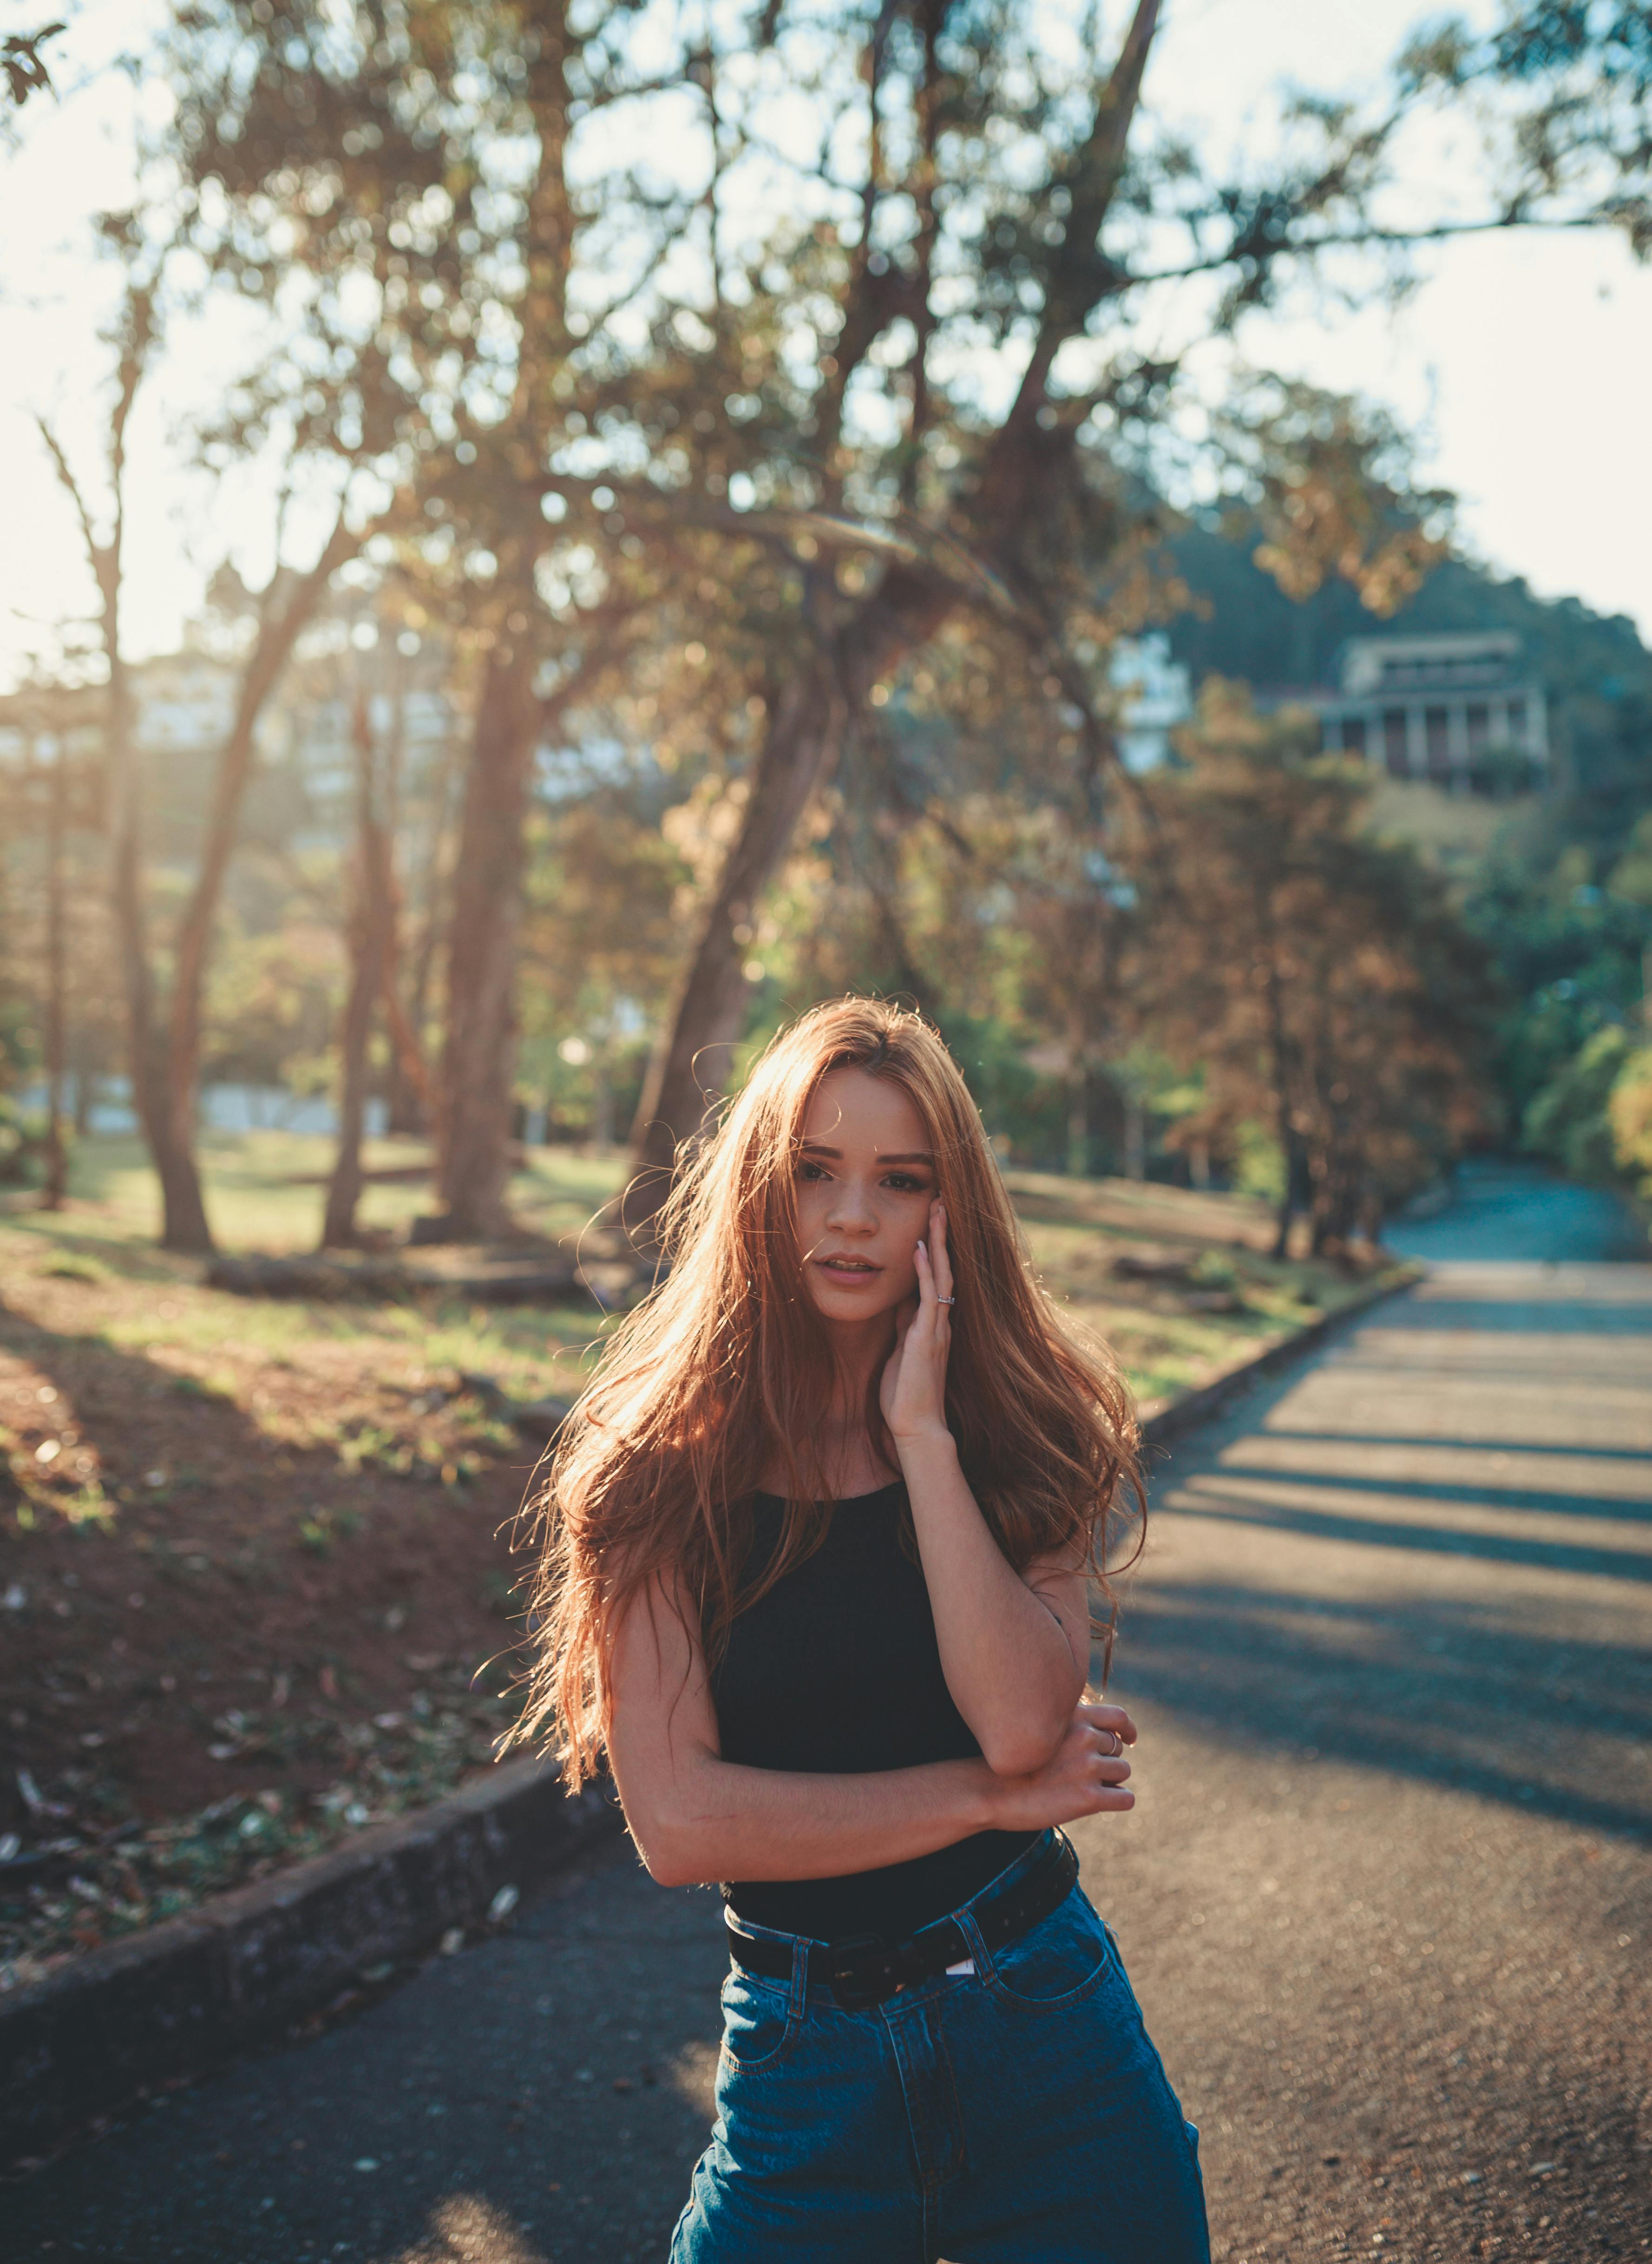 20 Poses for Instagram Models - FilterGrade